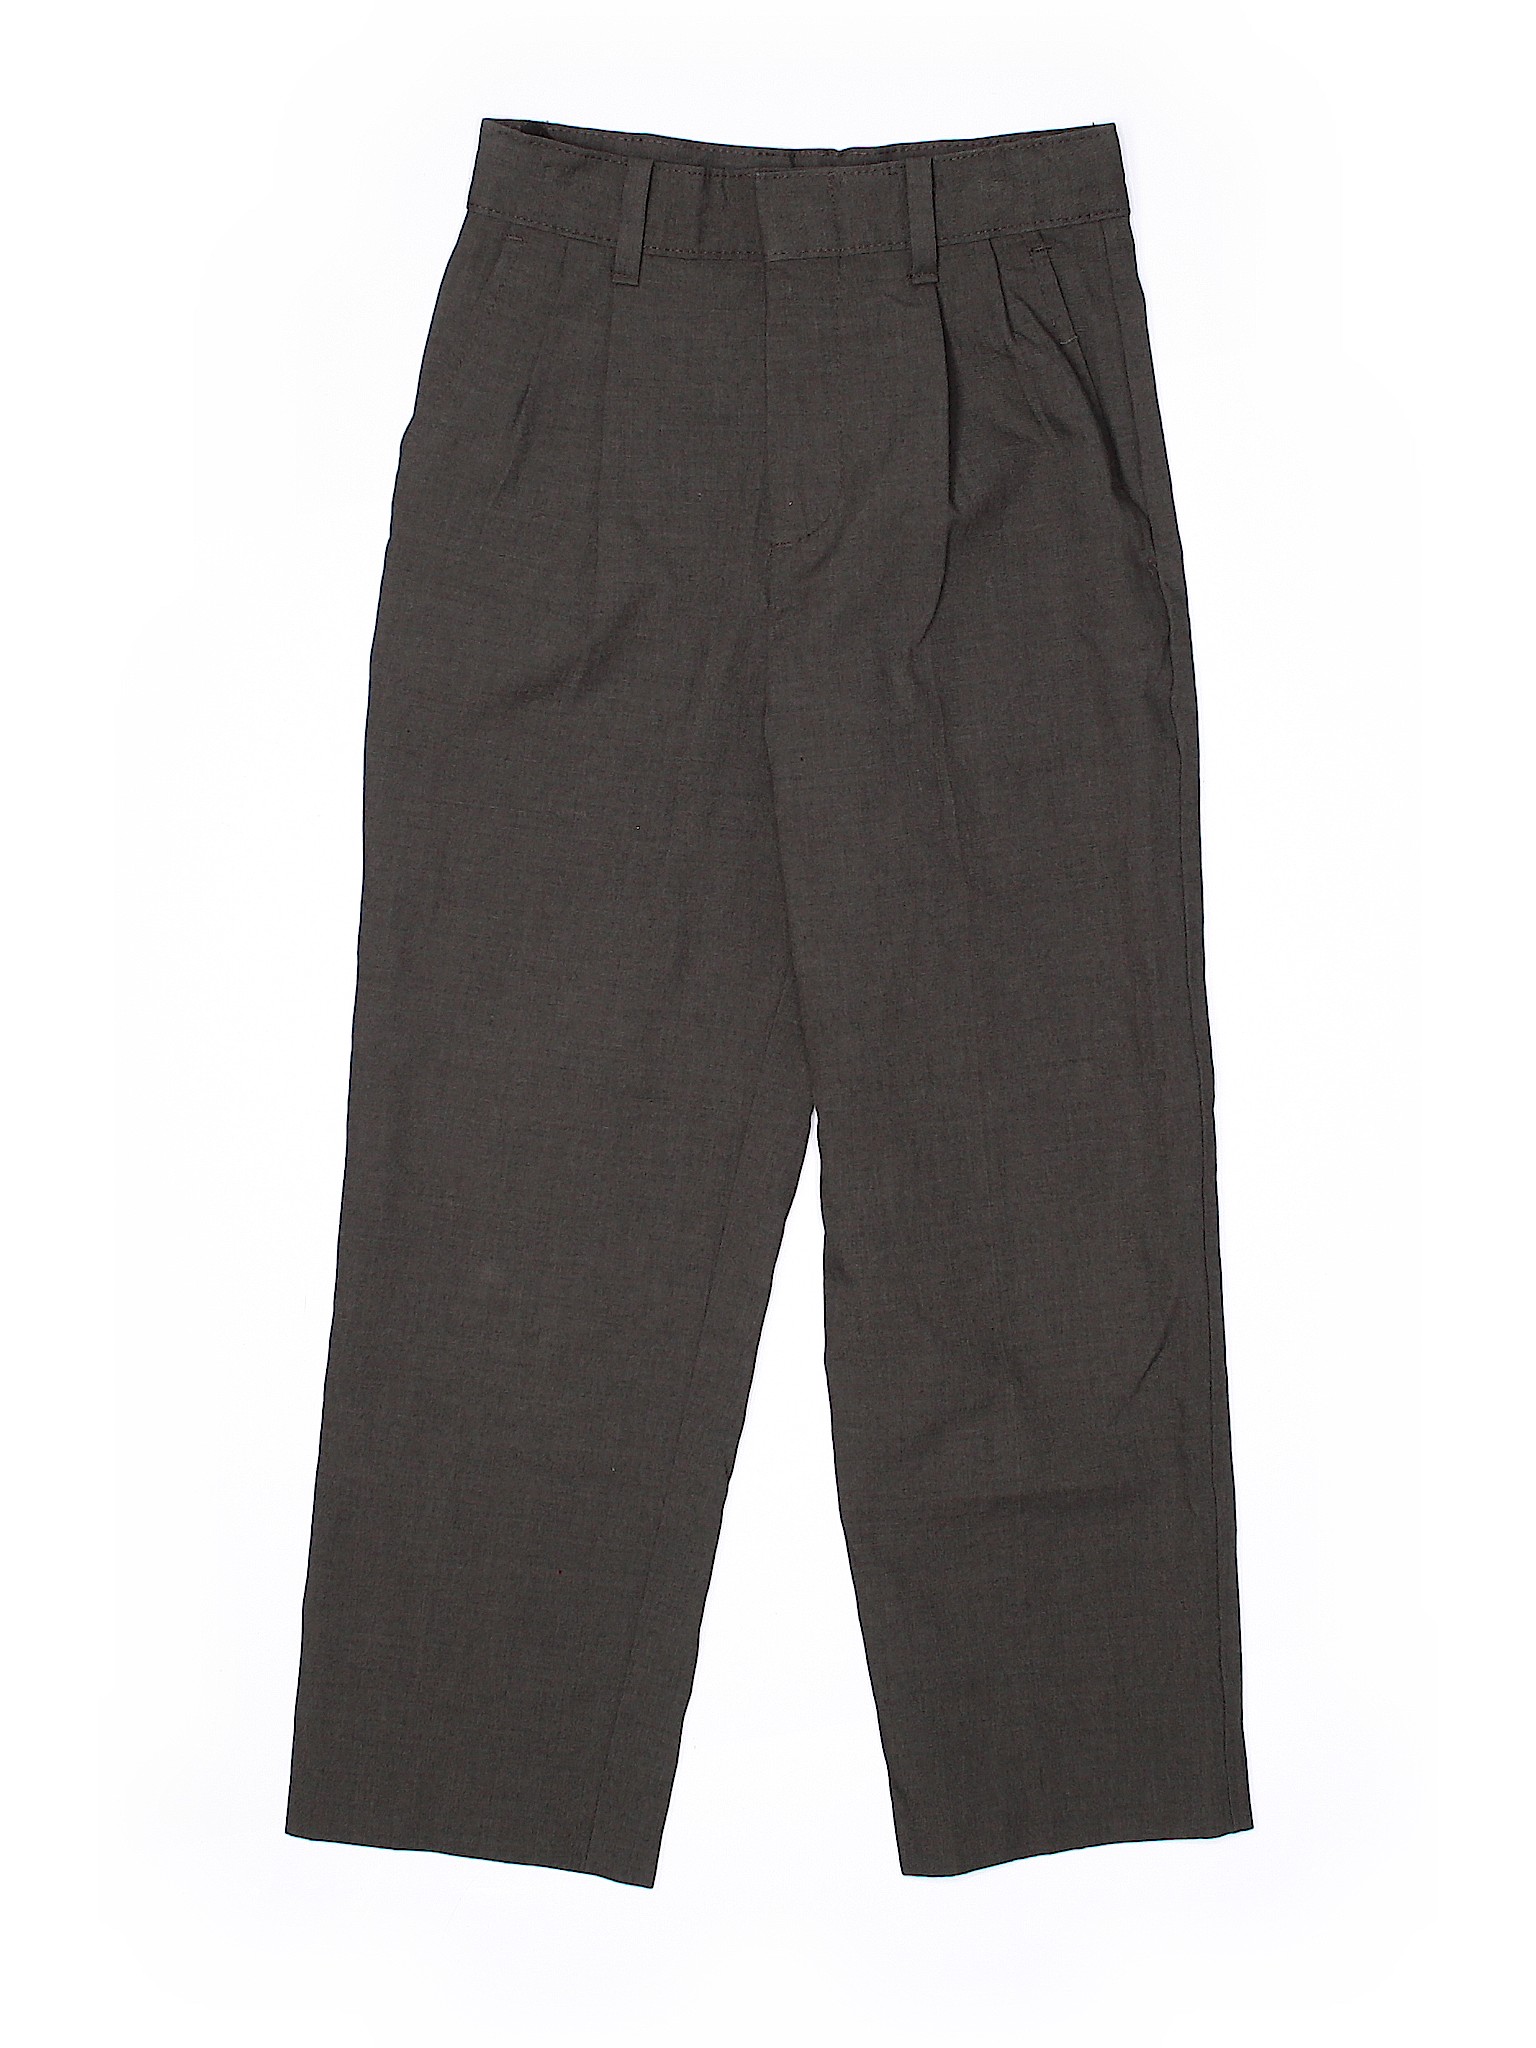 Unbranded Boys Gray Dress Pants 6 Slim | eBay